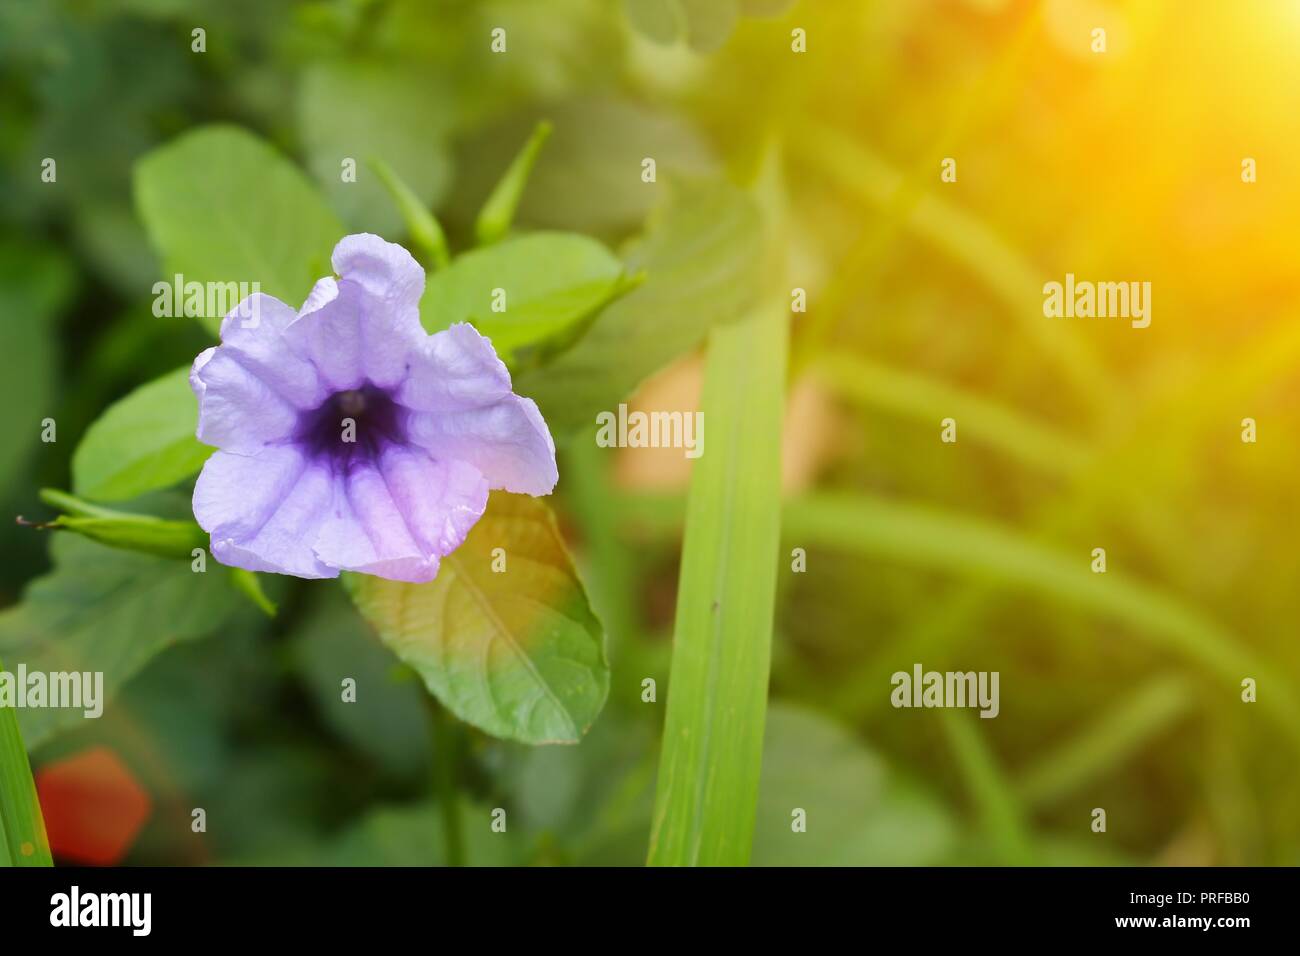 purple ruellias flower bloom in the morning. (Ruellia tuberosa Linn. Waterkanon, Watrakanu, Feverroot, Popping pod) : blurred background : select focu Stock Photo